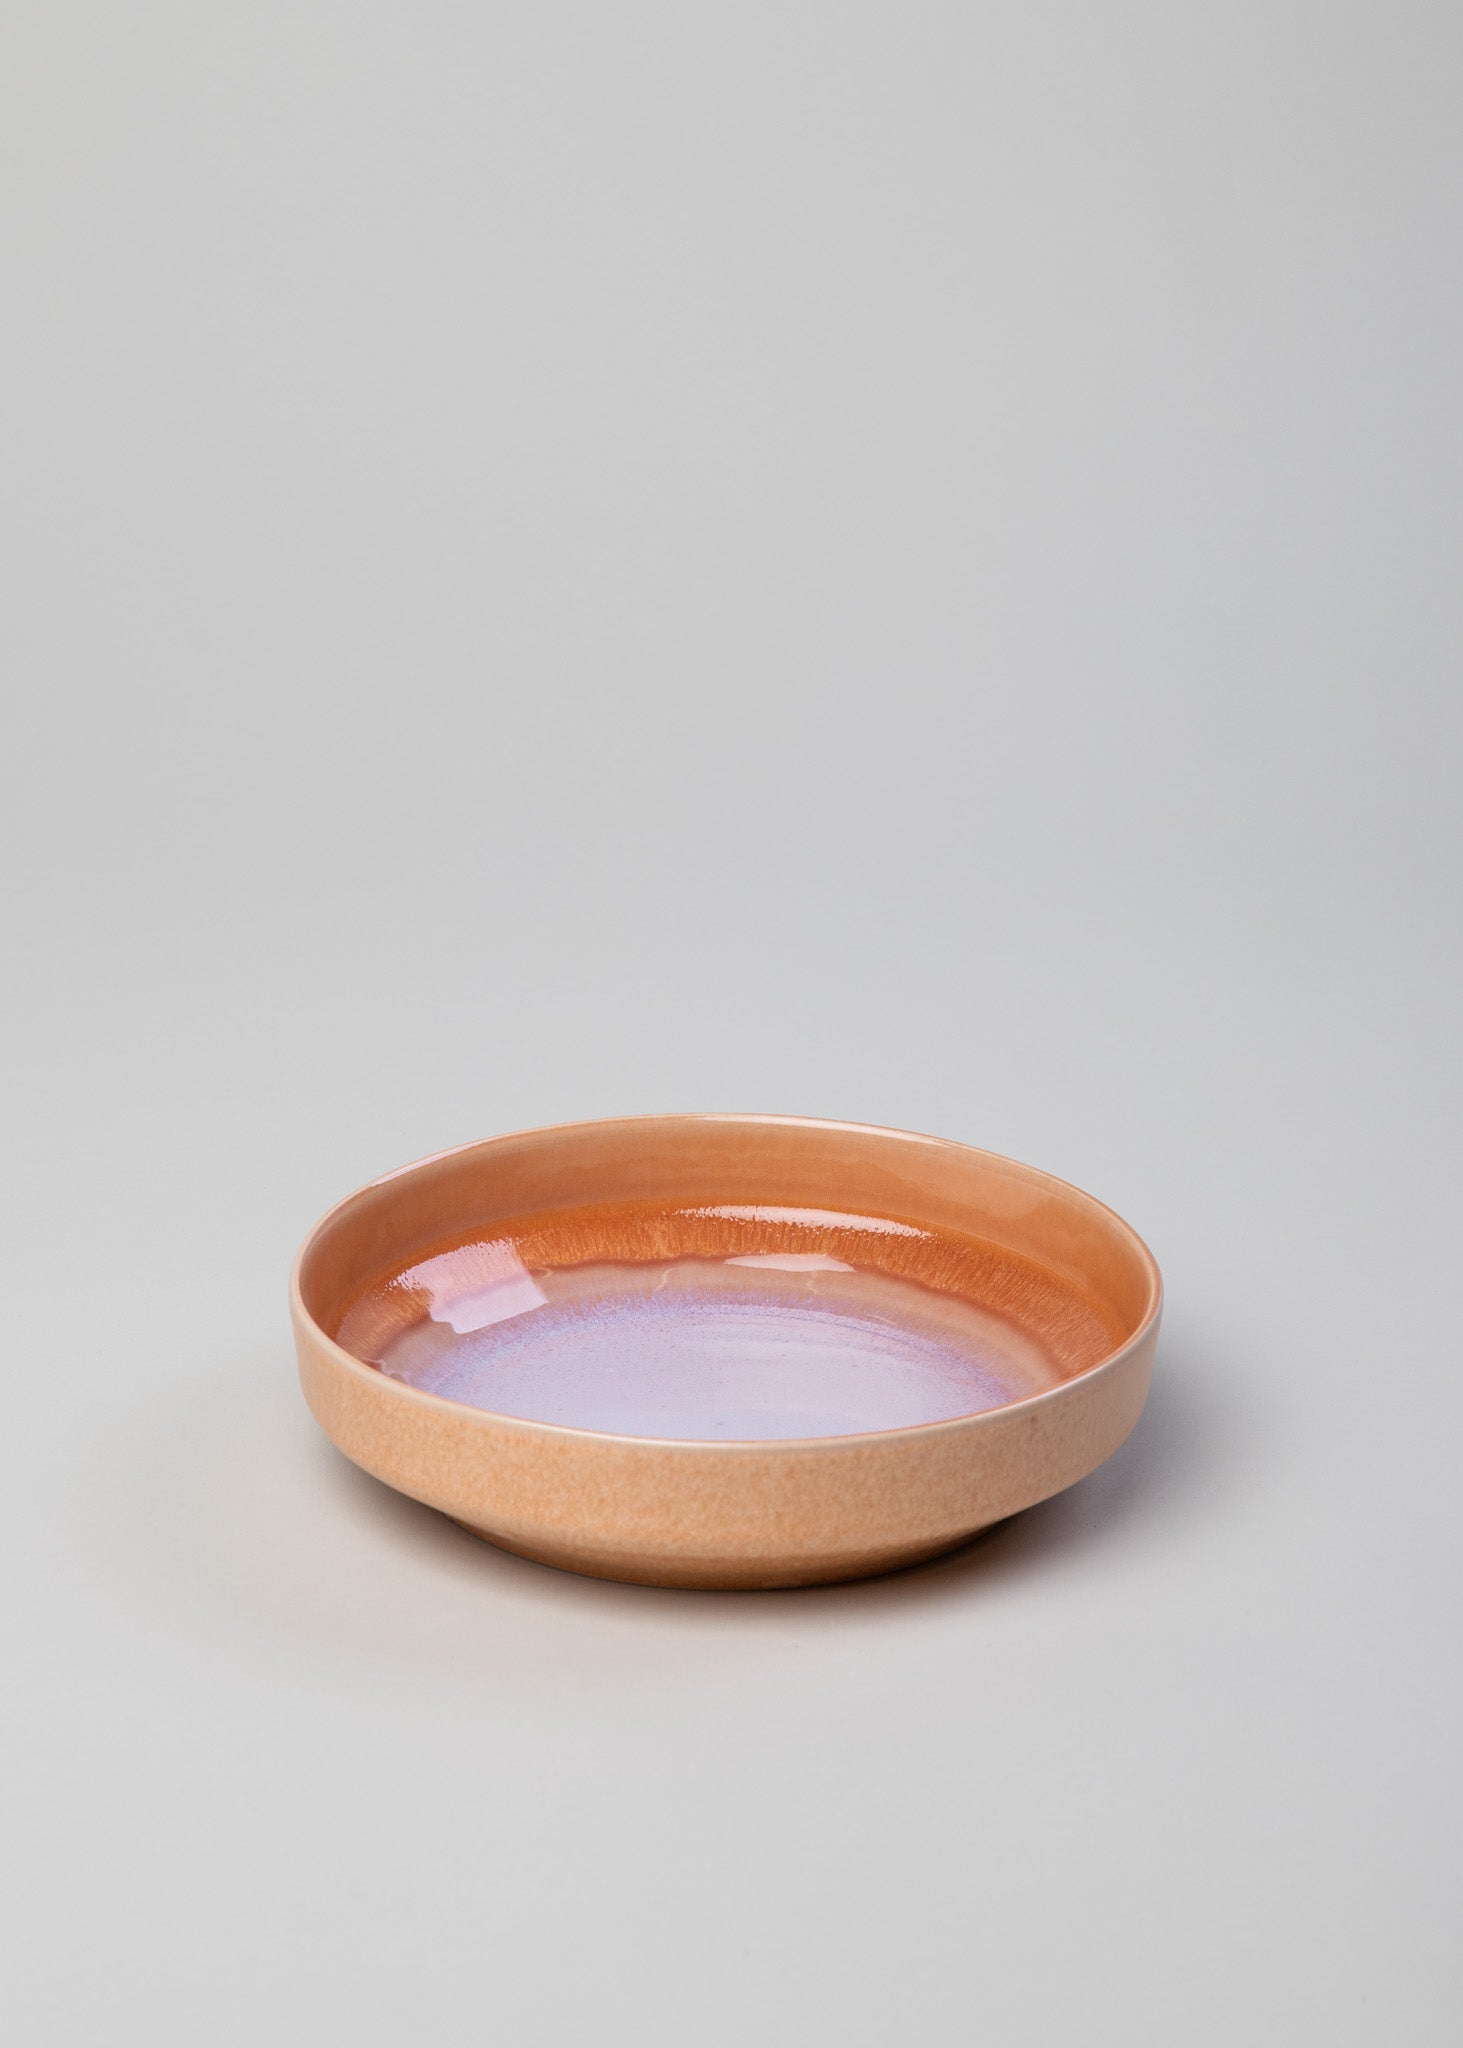 Keramik Suppen Teller von Vida Nova Ceramica